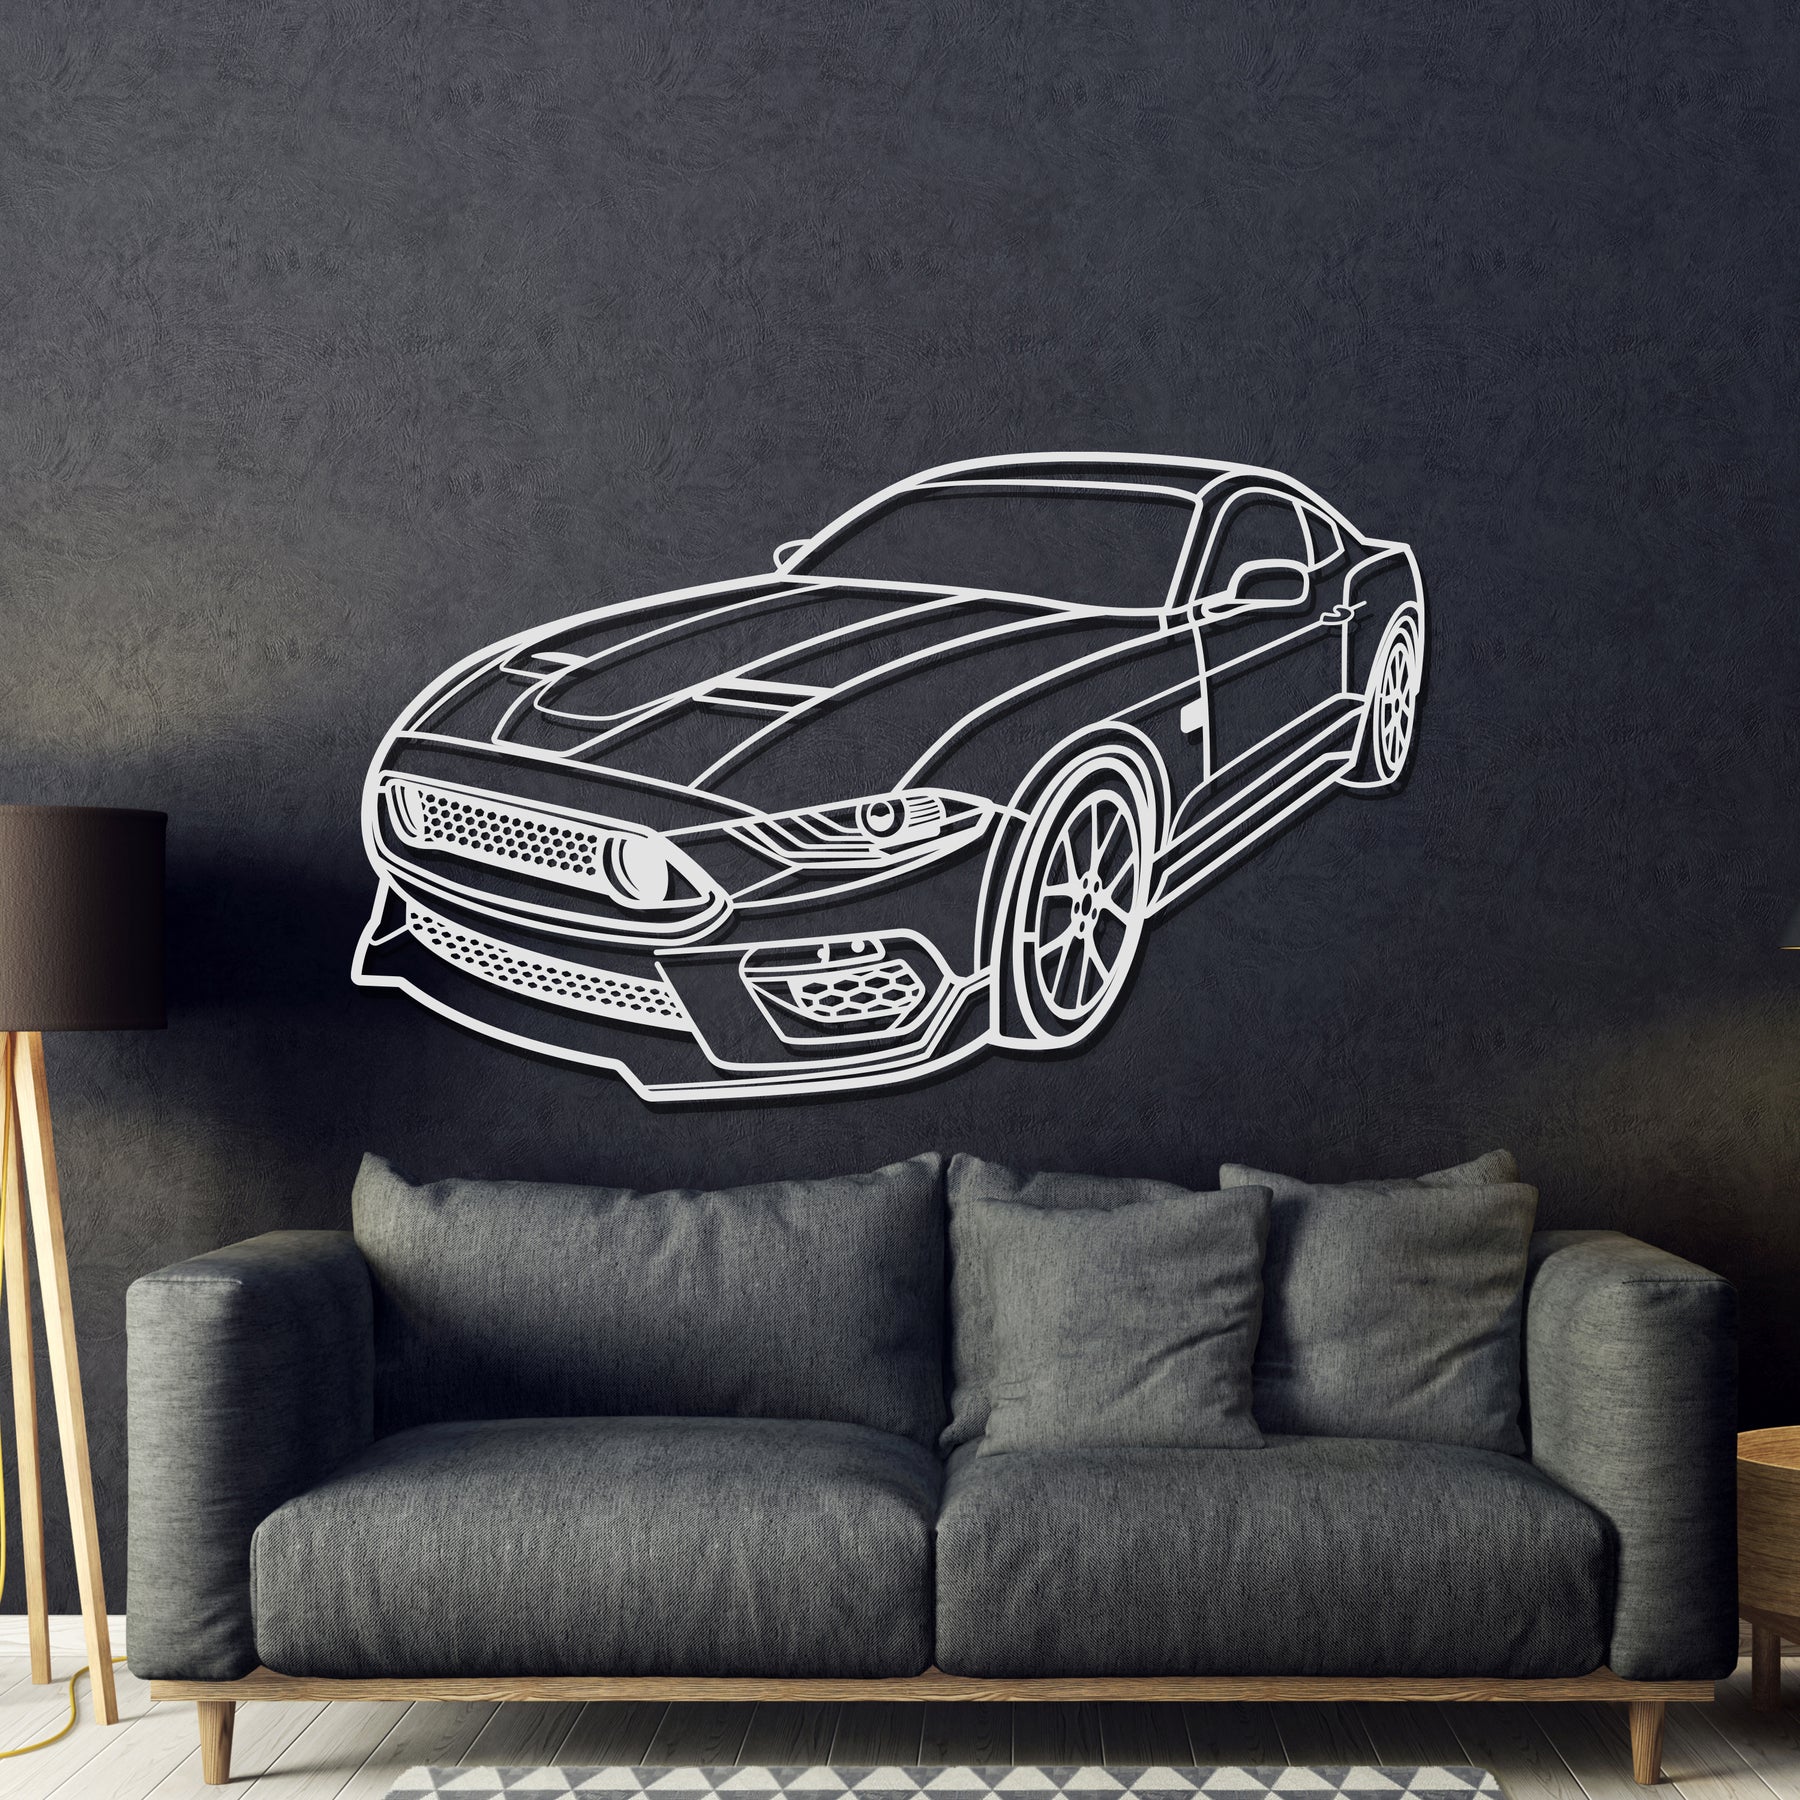 2013 Mustang Mach 1 Perspective Metal Car Wall Art - MT1159